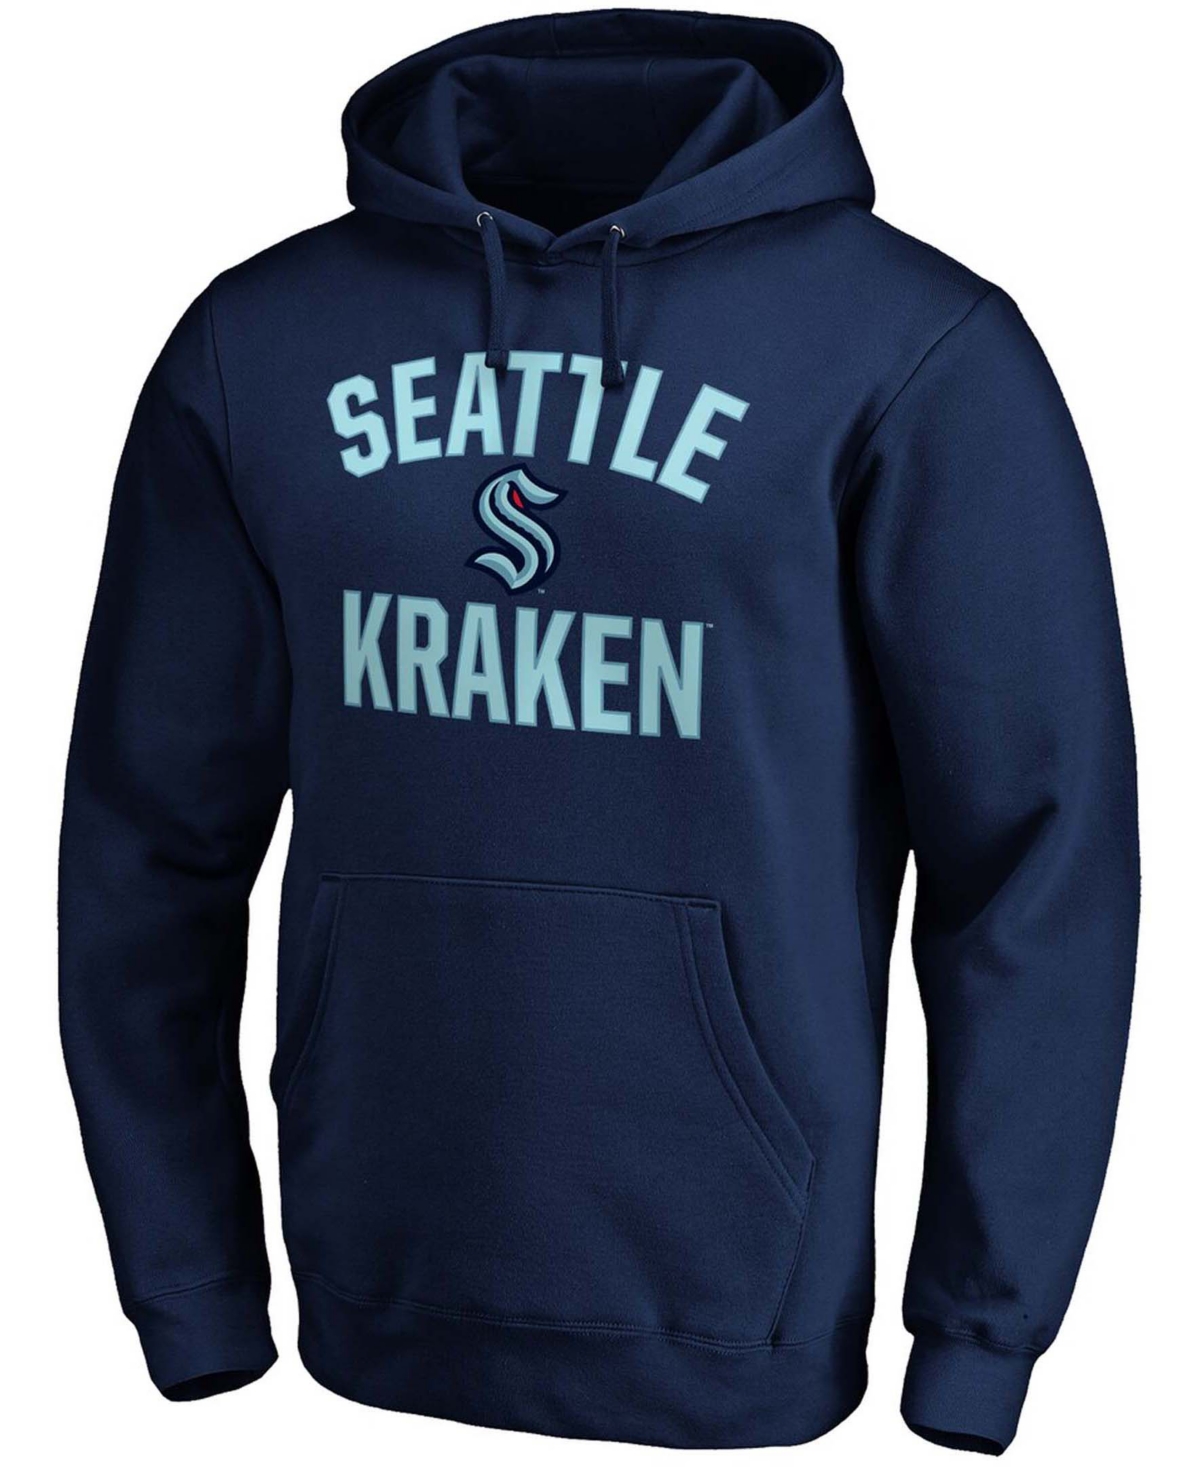 Shop Fanatics Men's Navy Seattle Kraken Victory Arch Pullover Hoodie